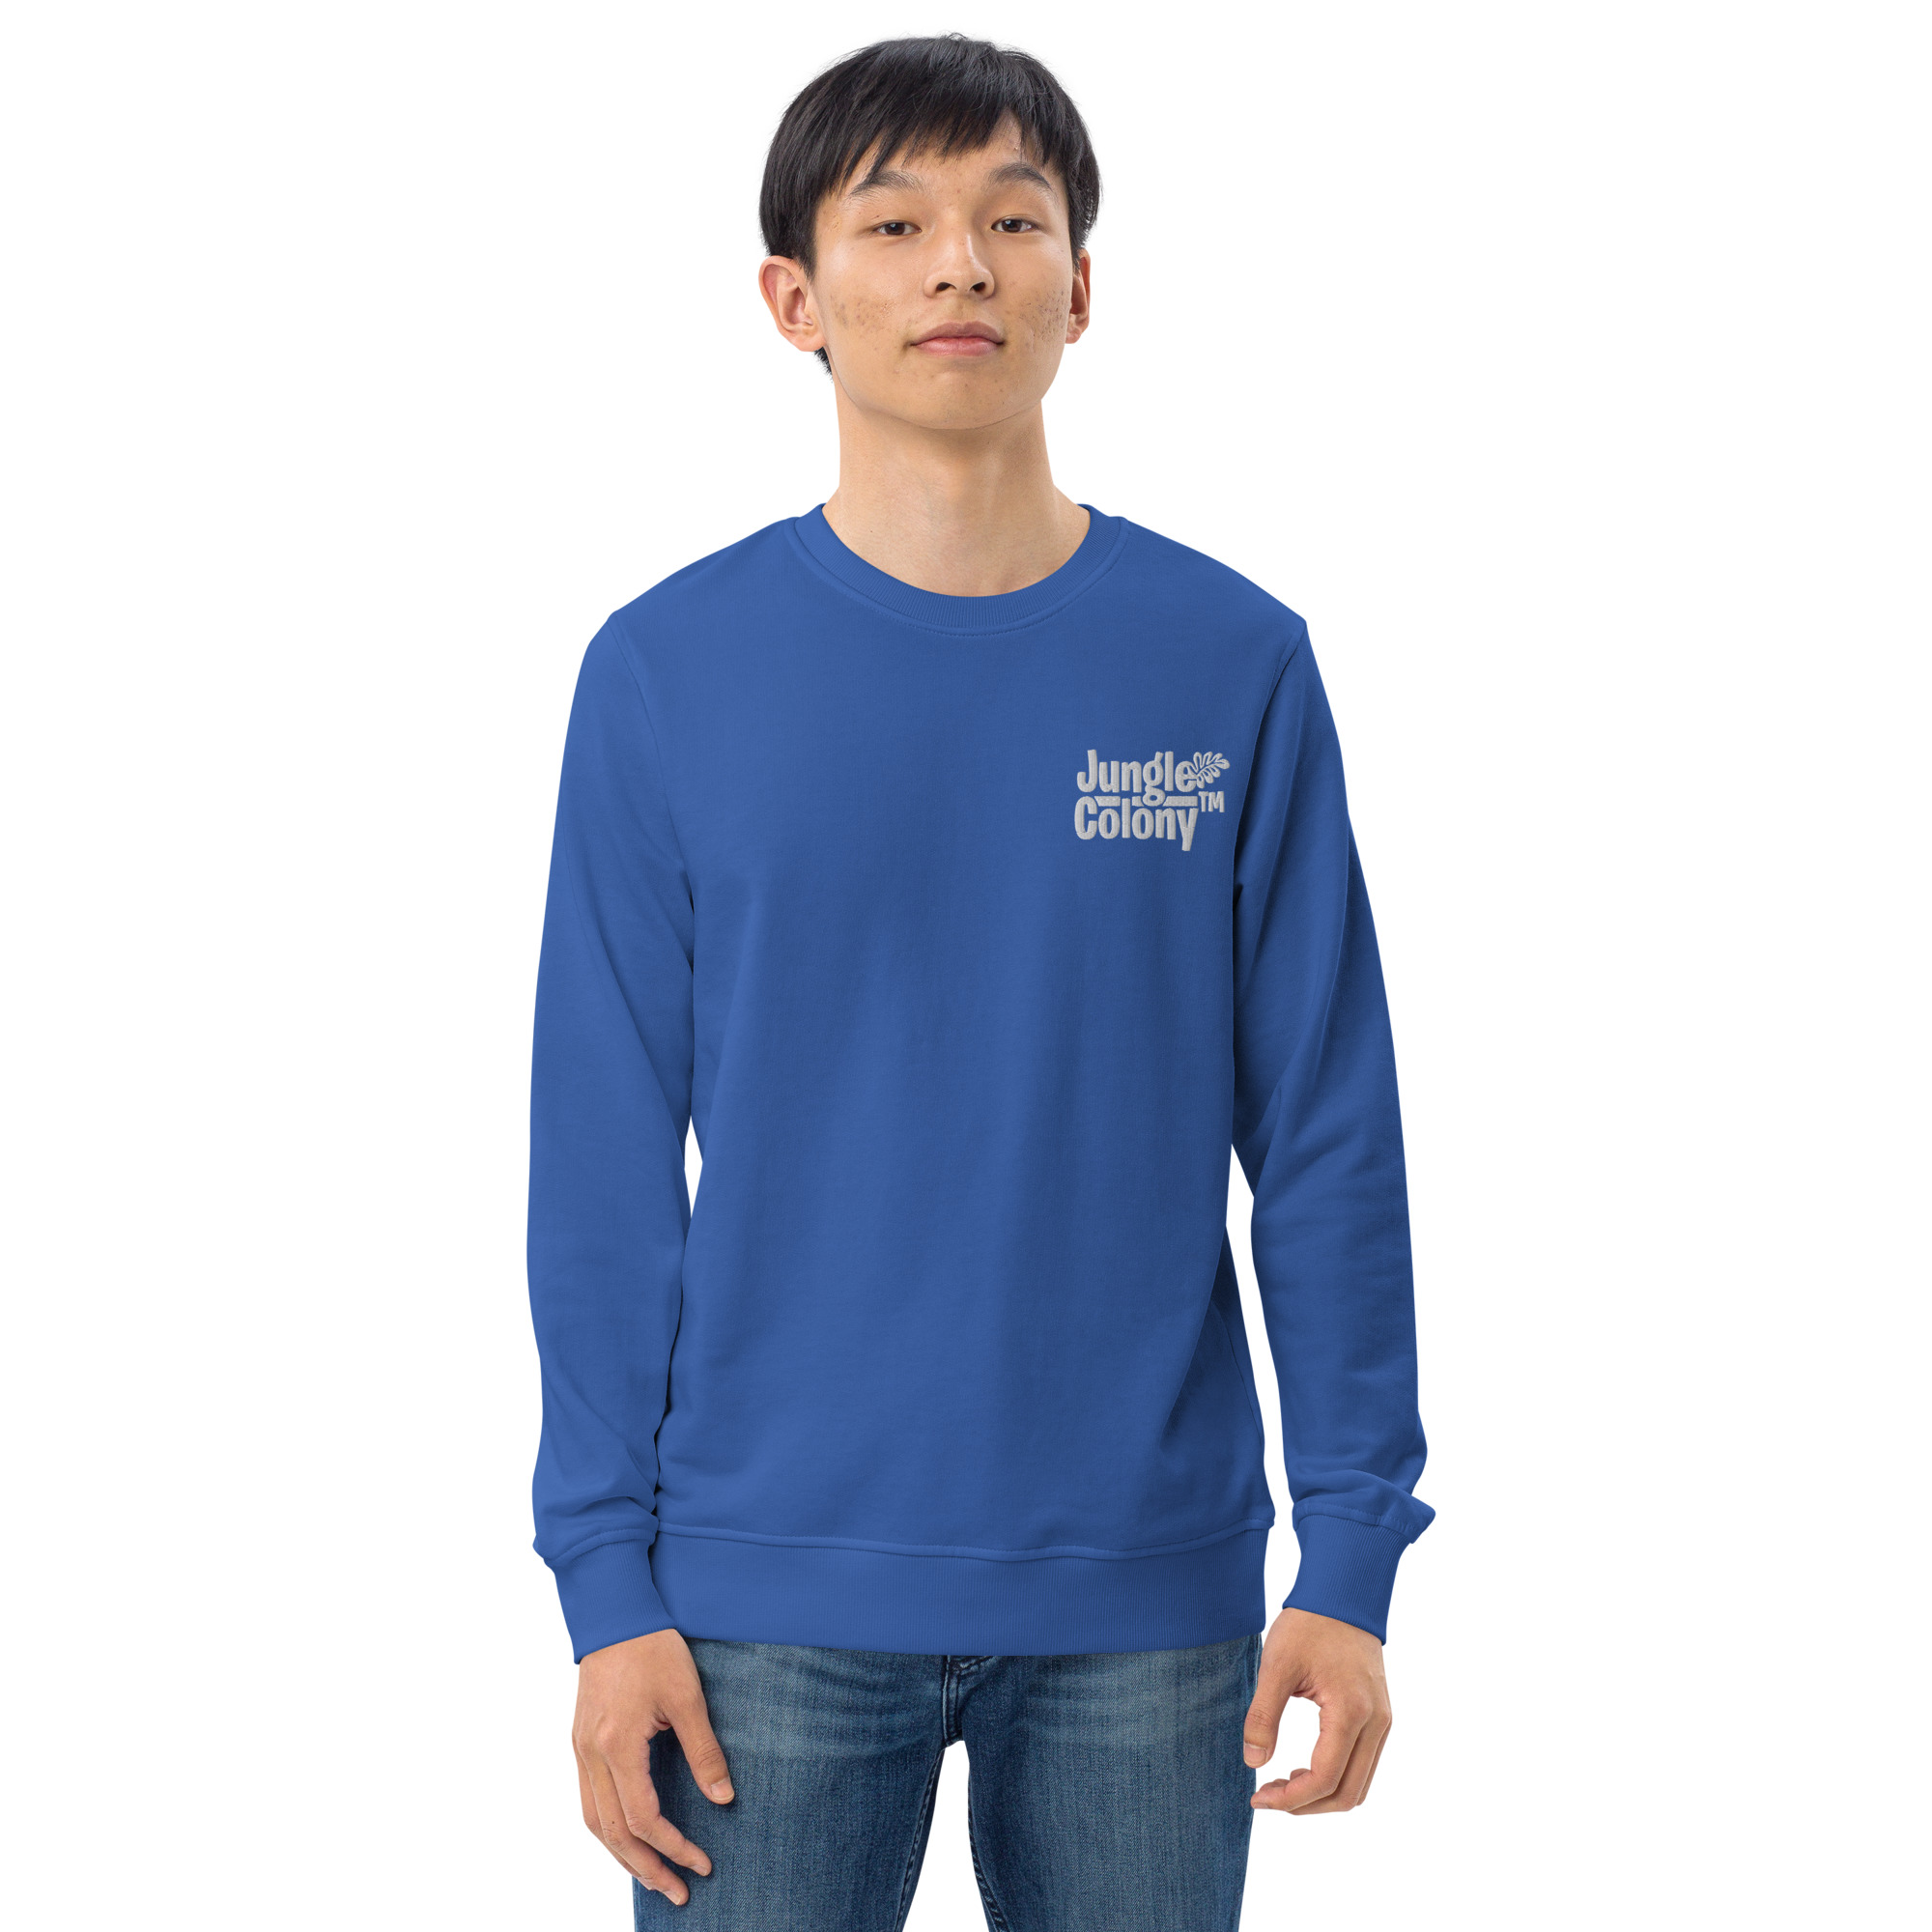 unisex-organic-sweatshirt-royal-blue-front-2-64200a7837027.jpg